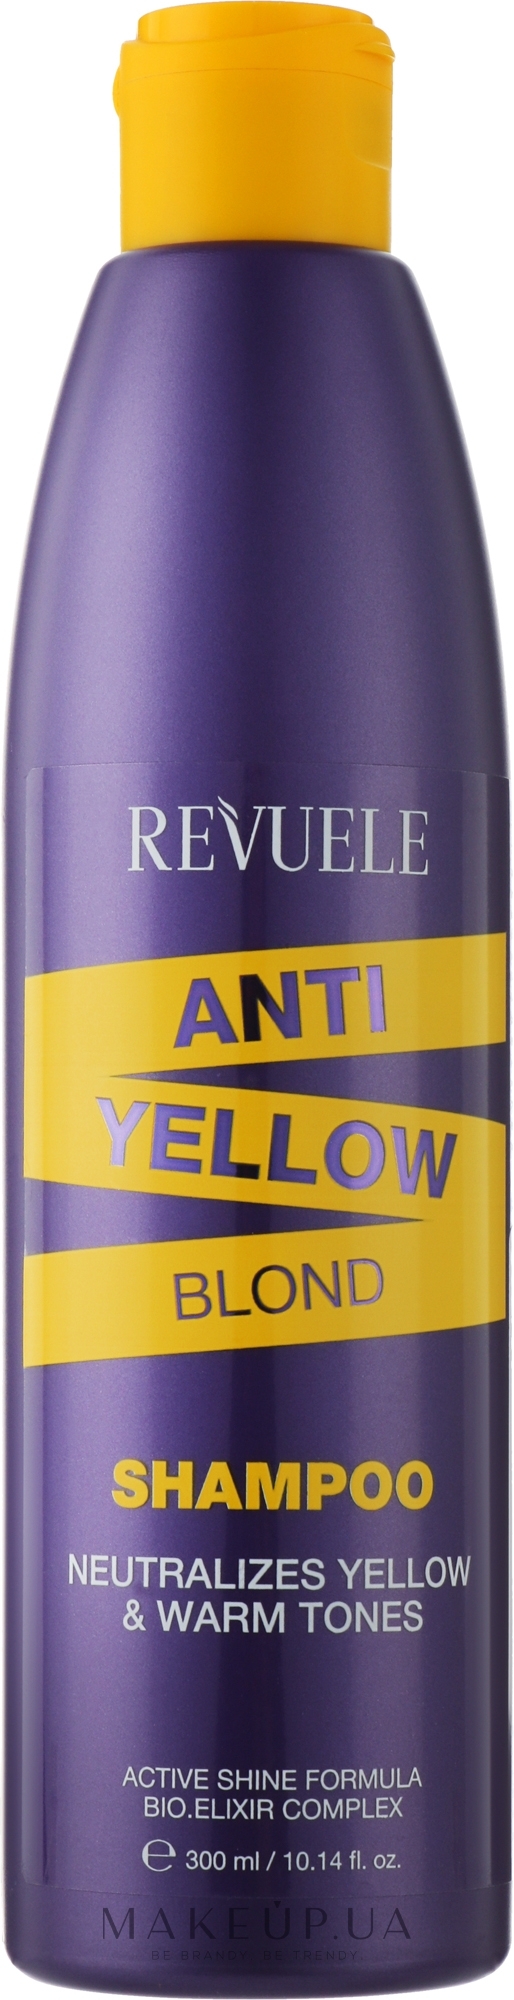 Шампунь для волос с антижелтым эффектом - Revuele Anti Yellow Blond Shampoo — фото 300ml